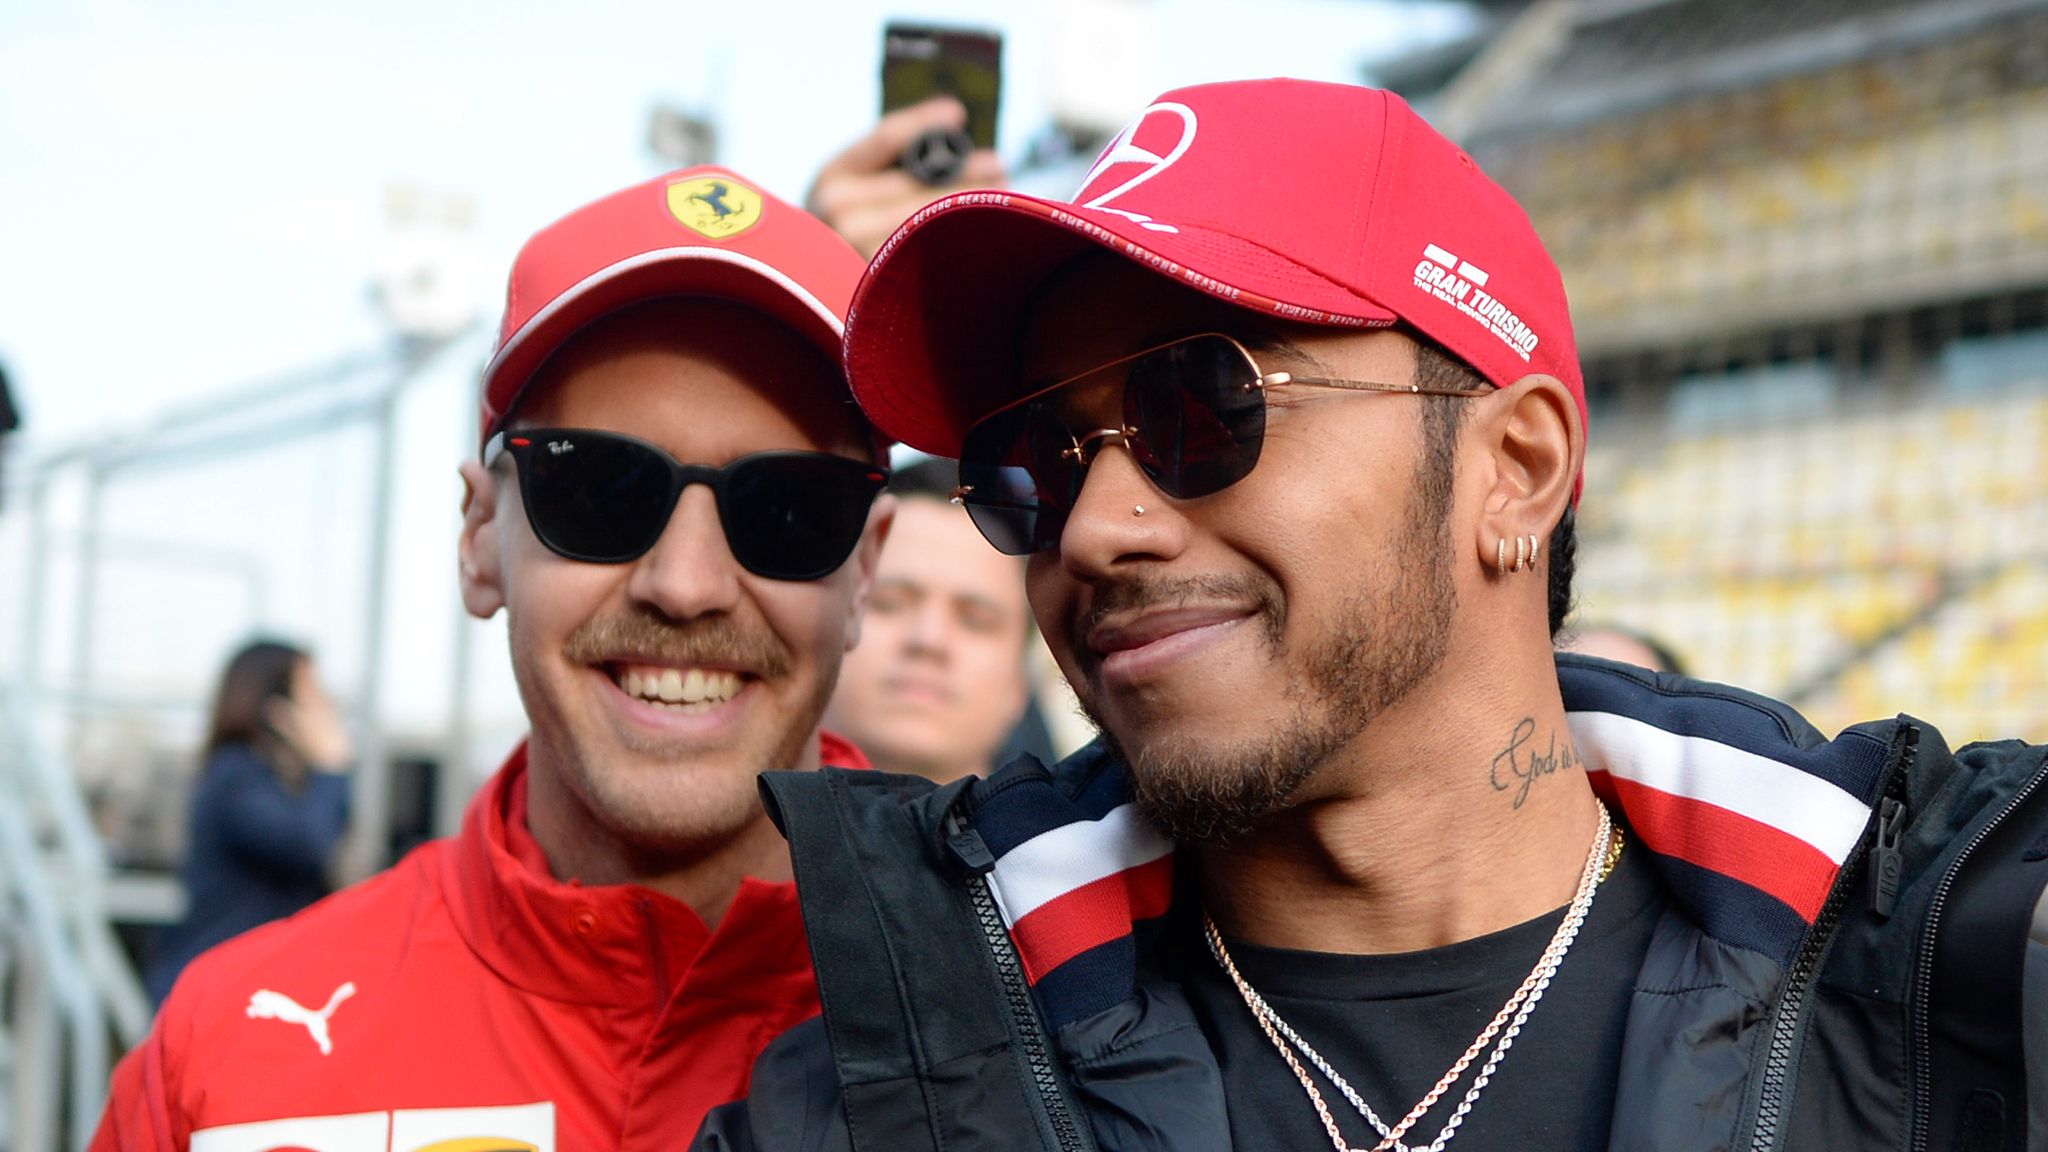 Caligrafía combinar Refinería Chinese GP: Lewis Hamilton sports 'lucky' Chinese red for Mercedes | F1 News